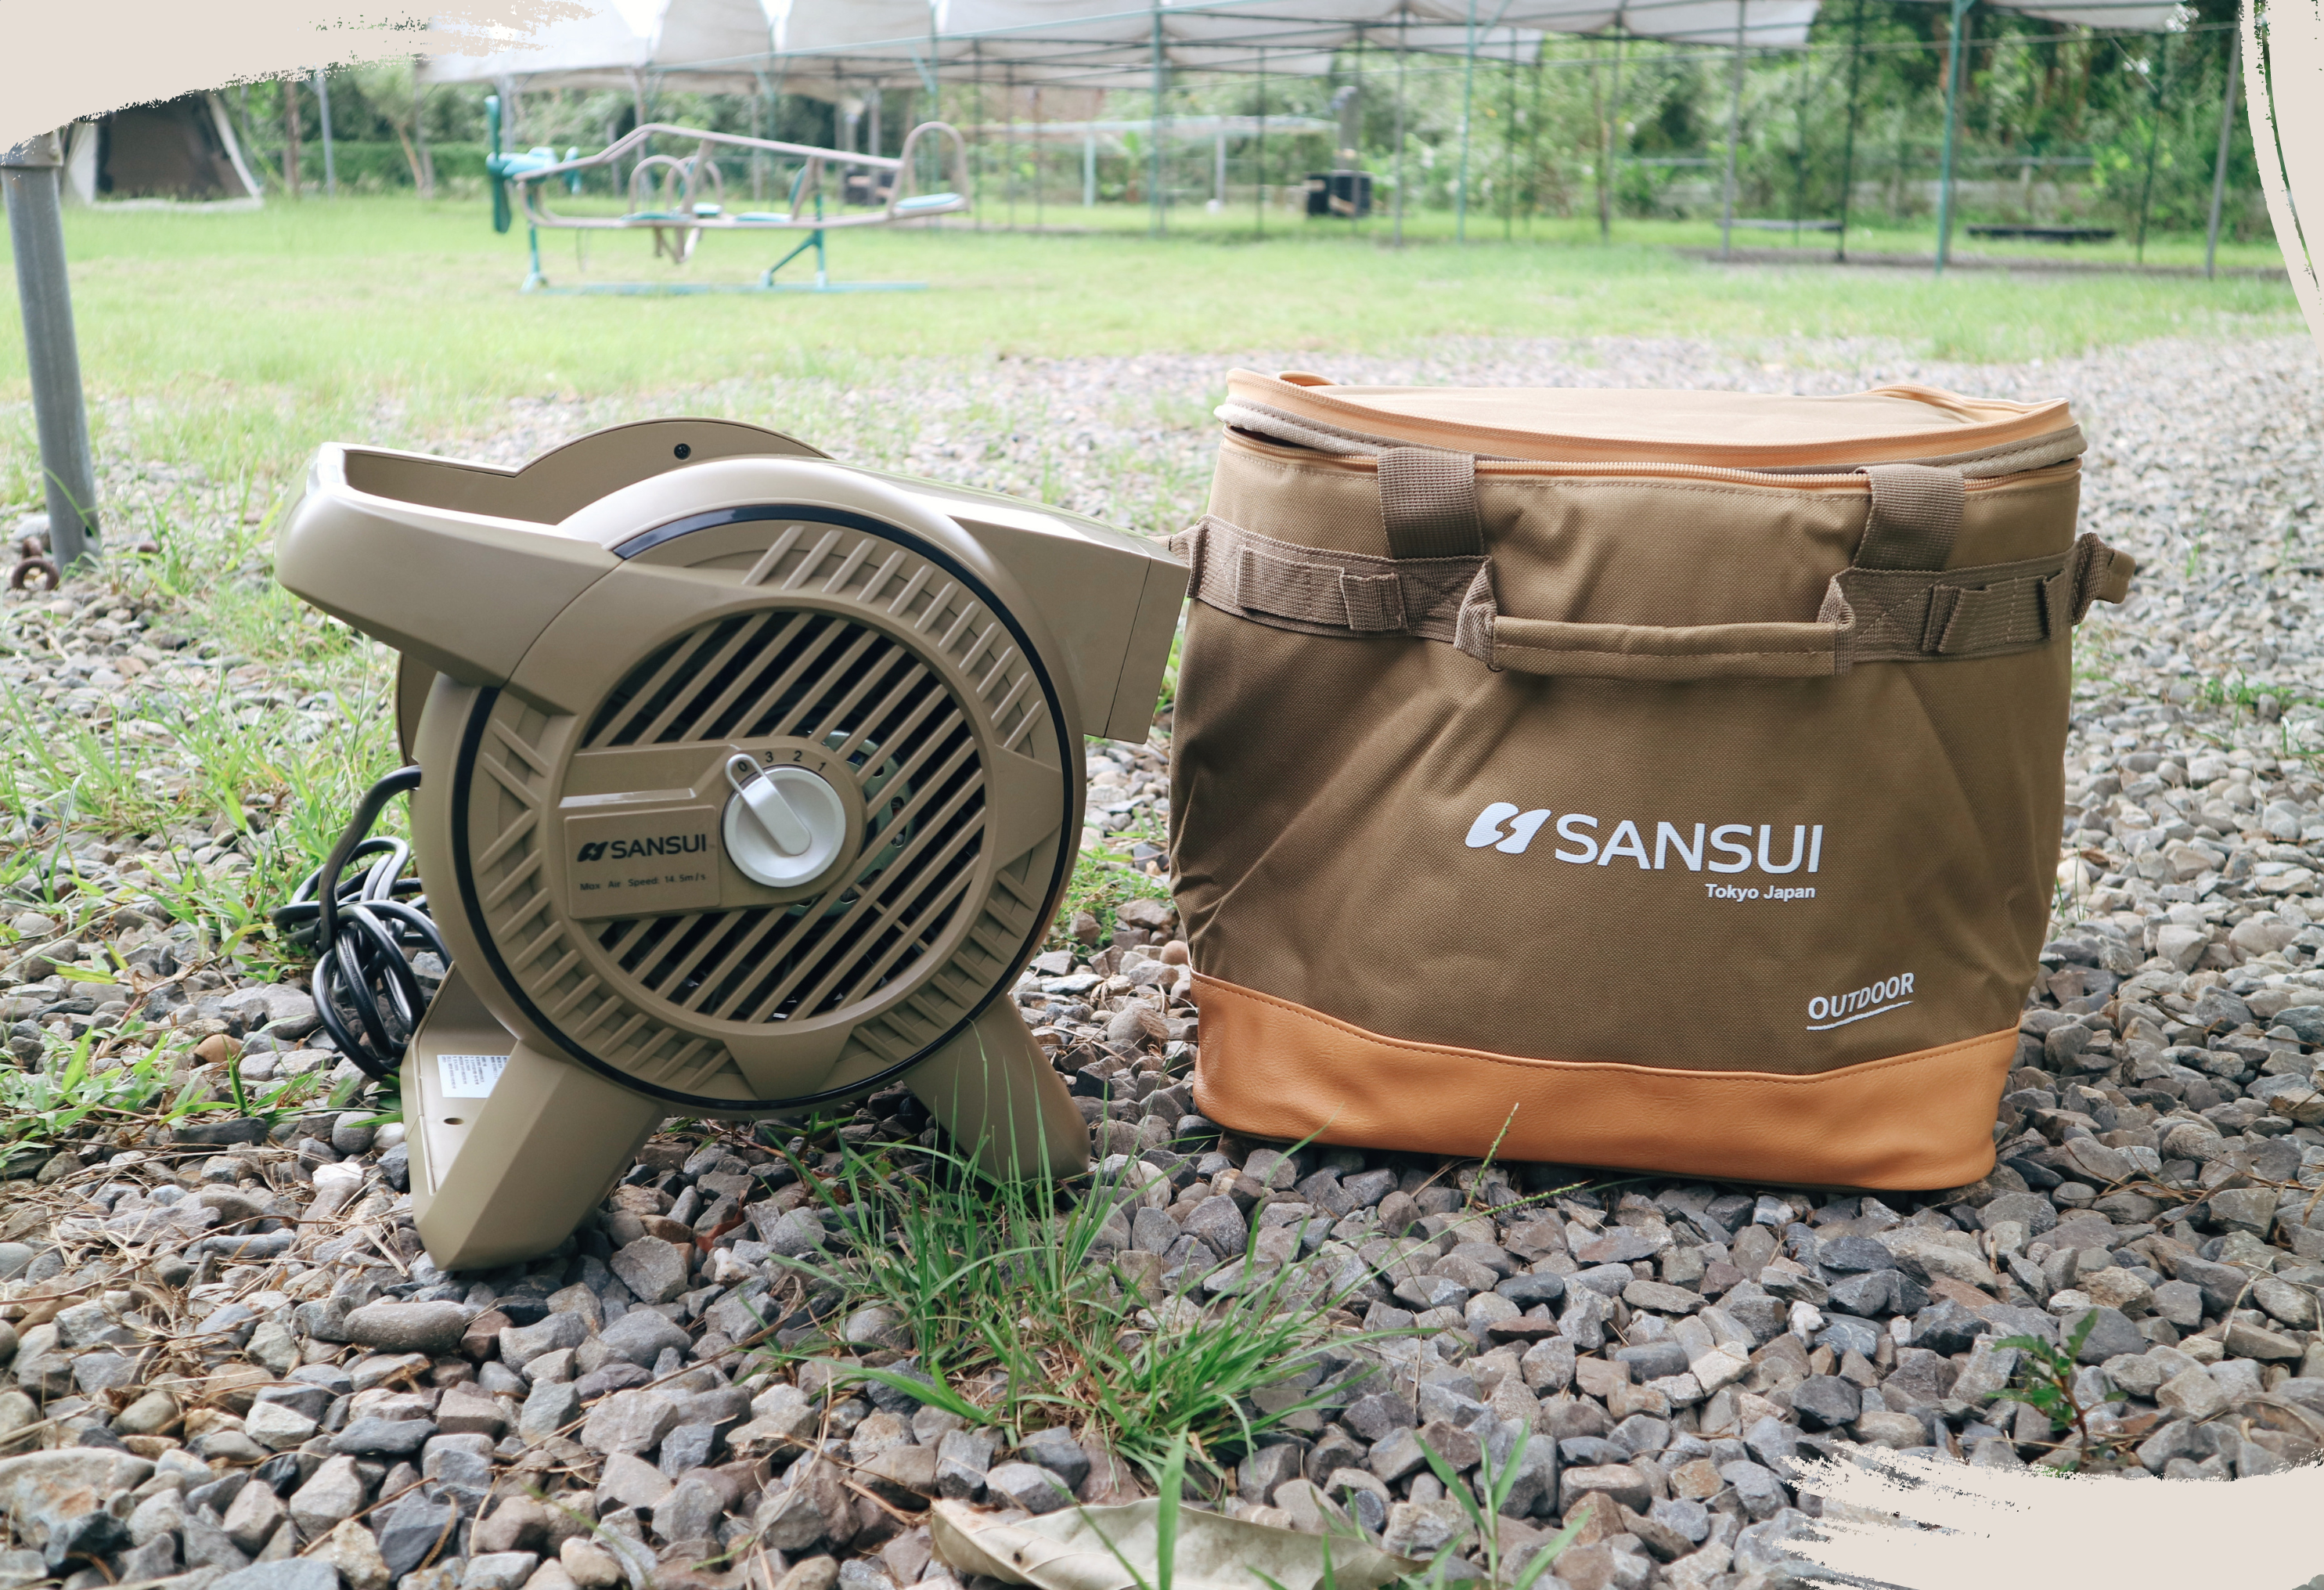 SANSUI山水【戶外循環渦輪扇】 ▎炎熱酷夏必備三段風速的